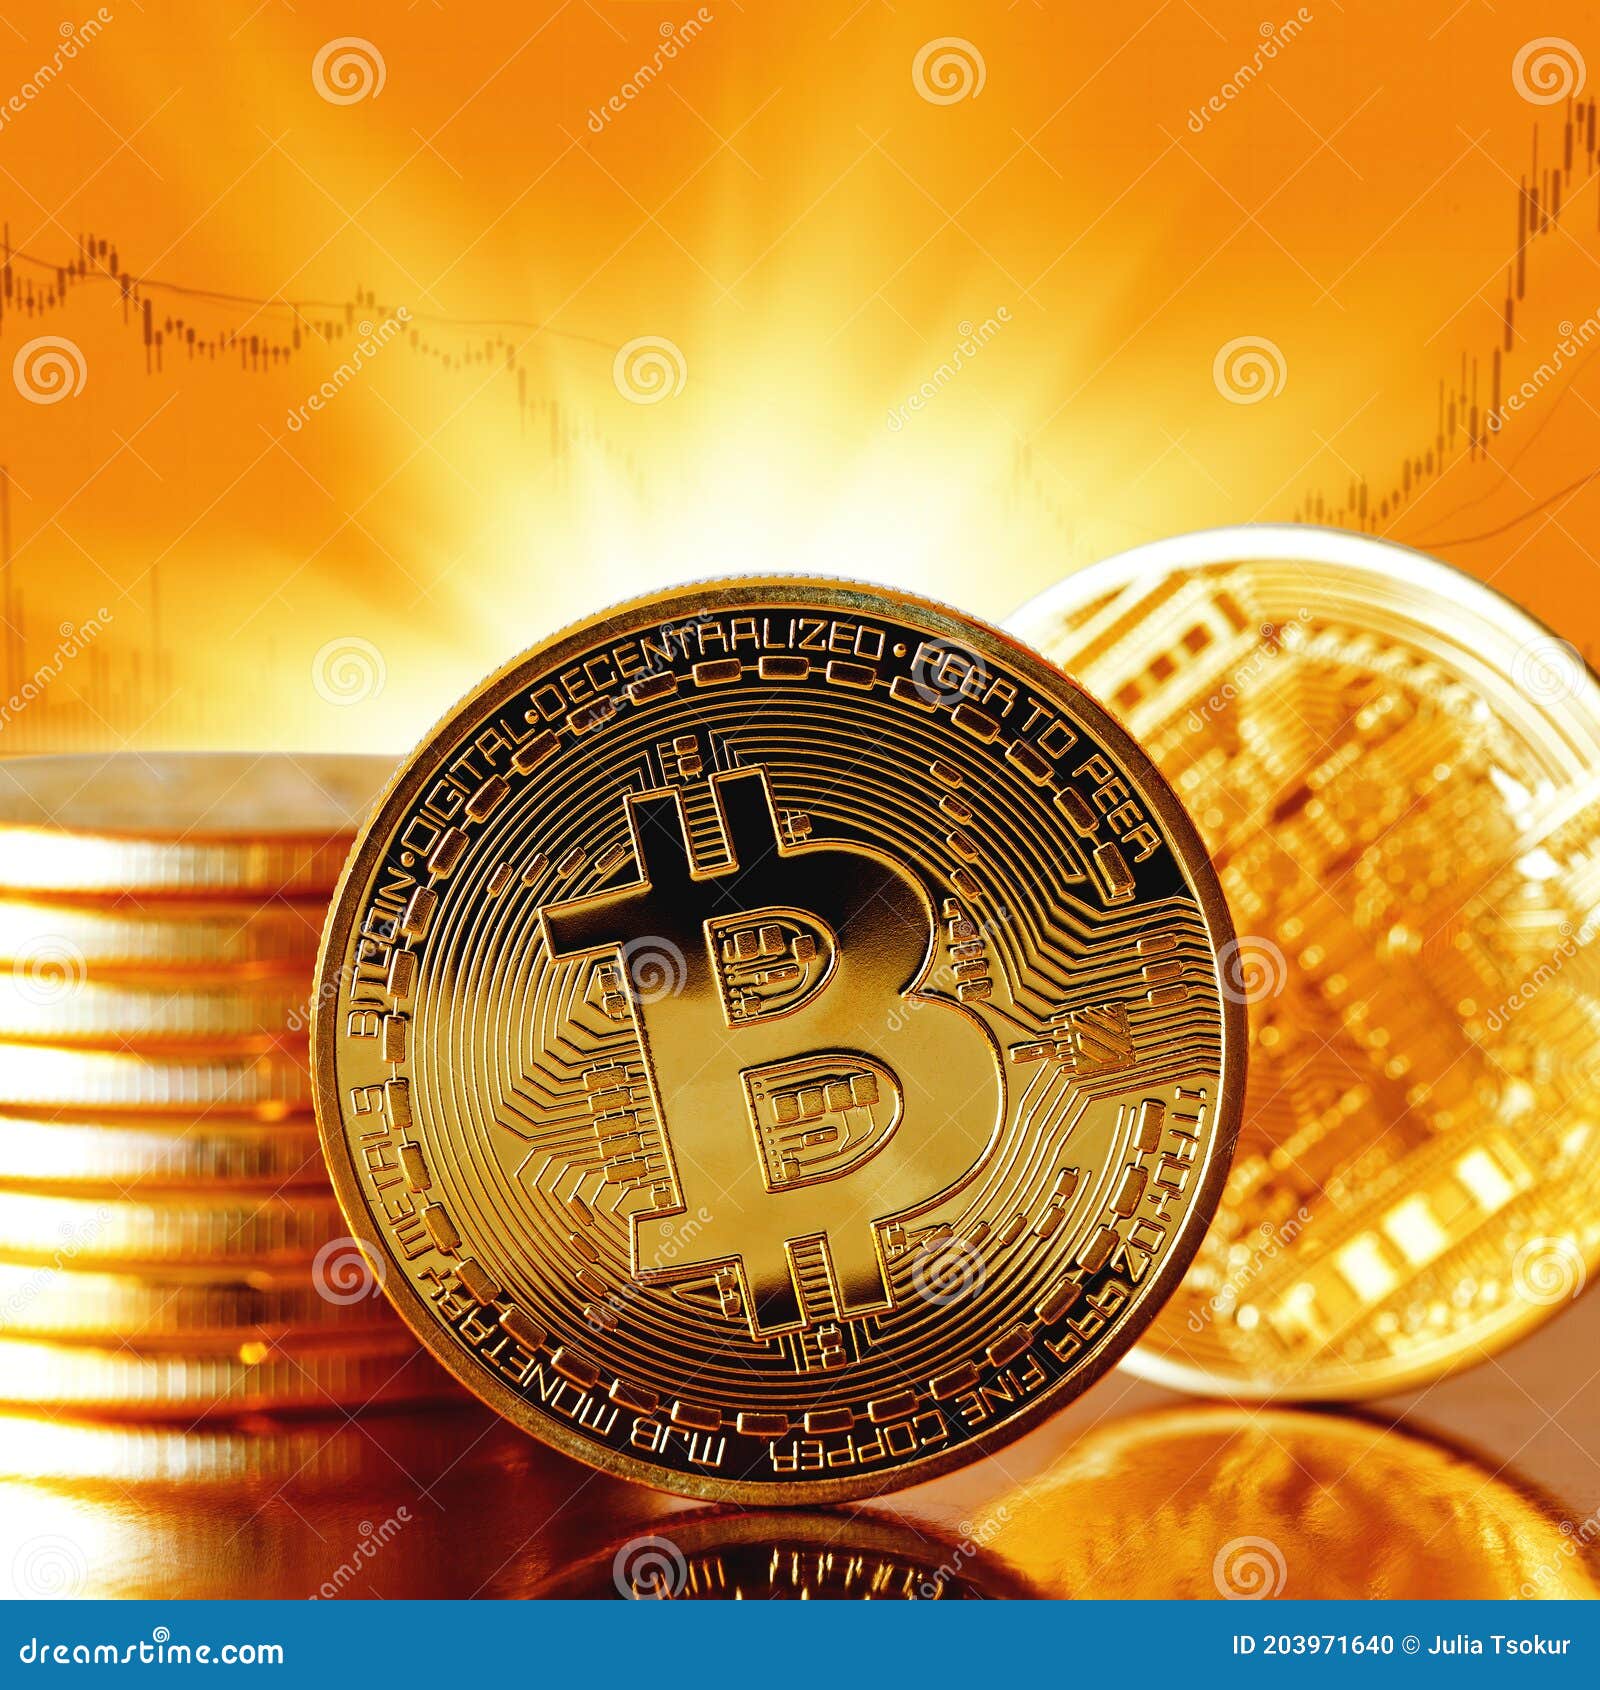 golden bitcoins new virtual money